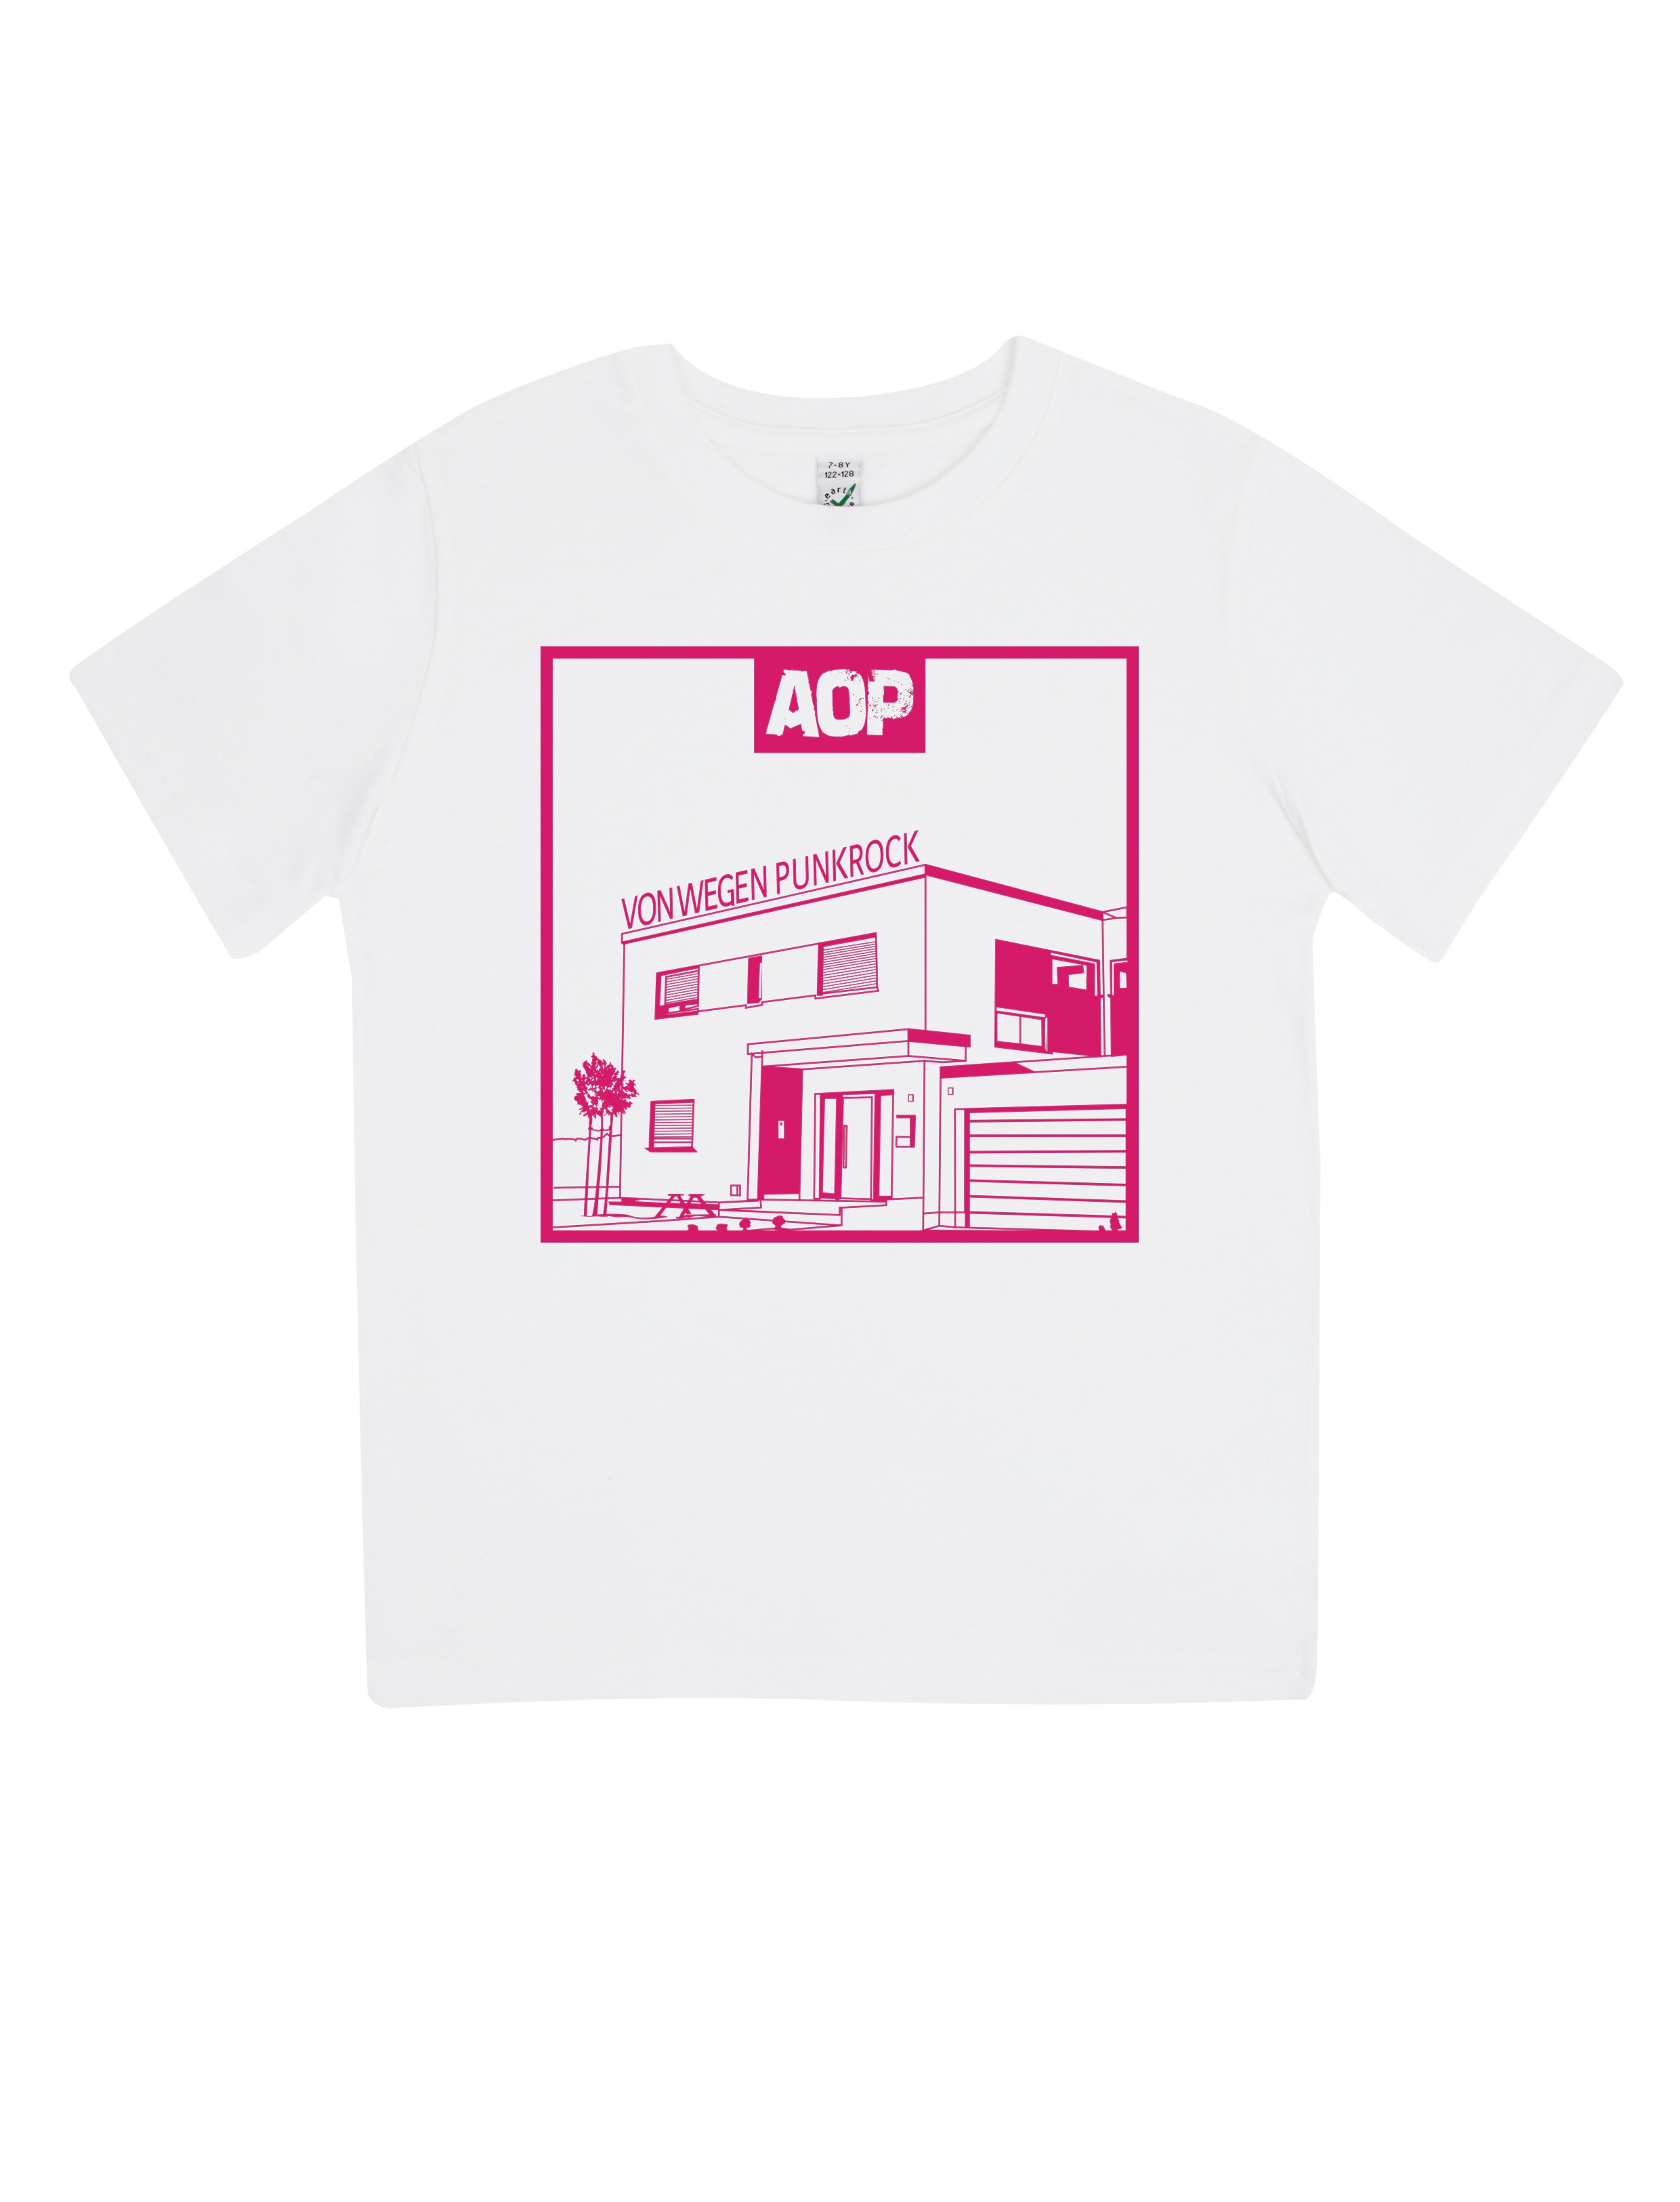 AOP – Von wegen Punkrock – Kids-Shirt (weiß)